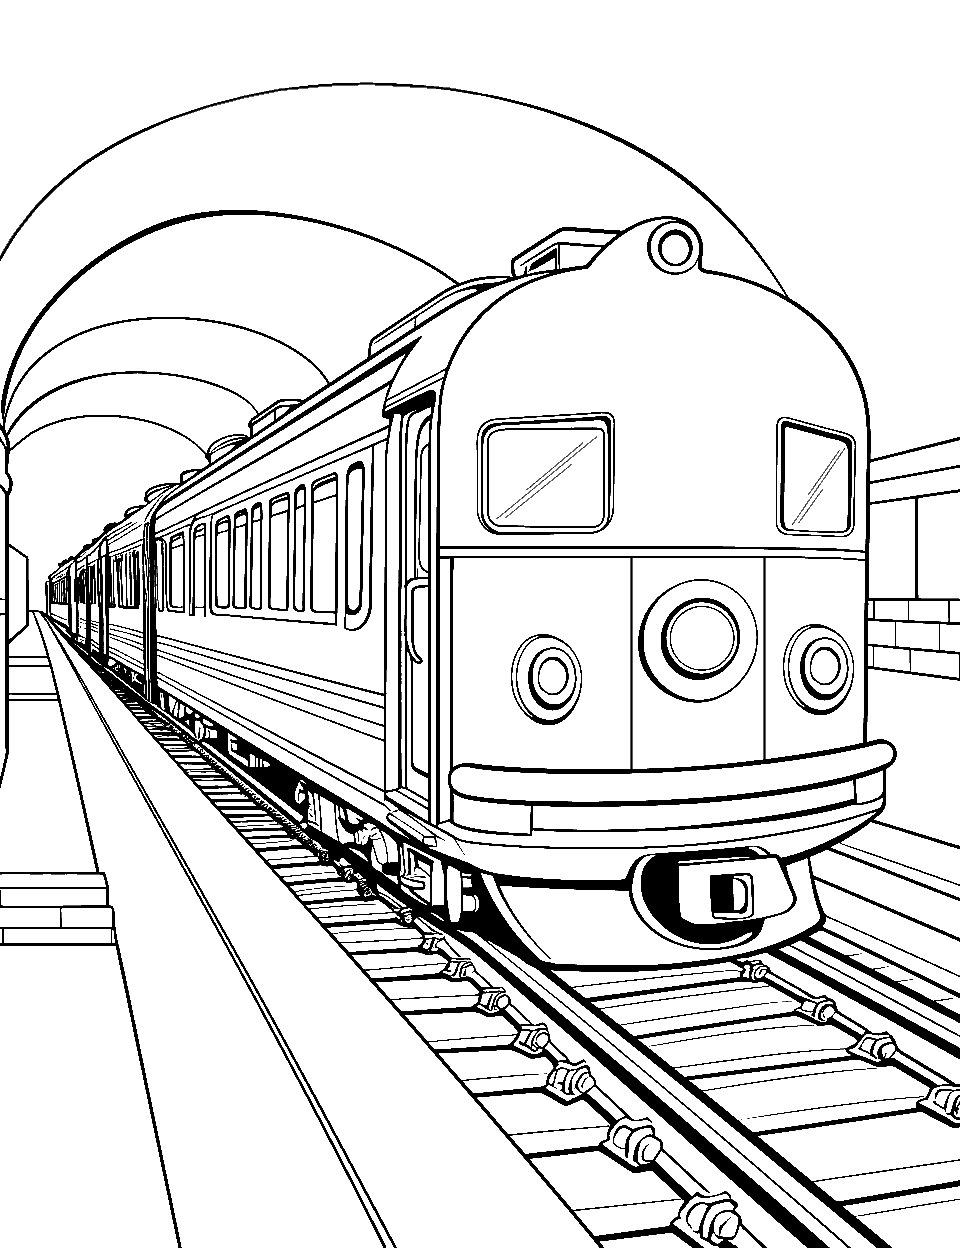 Underground Subway Scene Train Coloring Page - A sleek subway train in an underground tunnel.